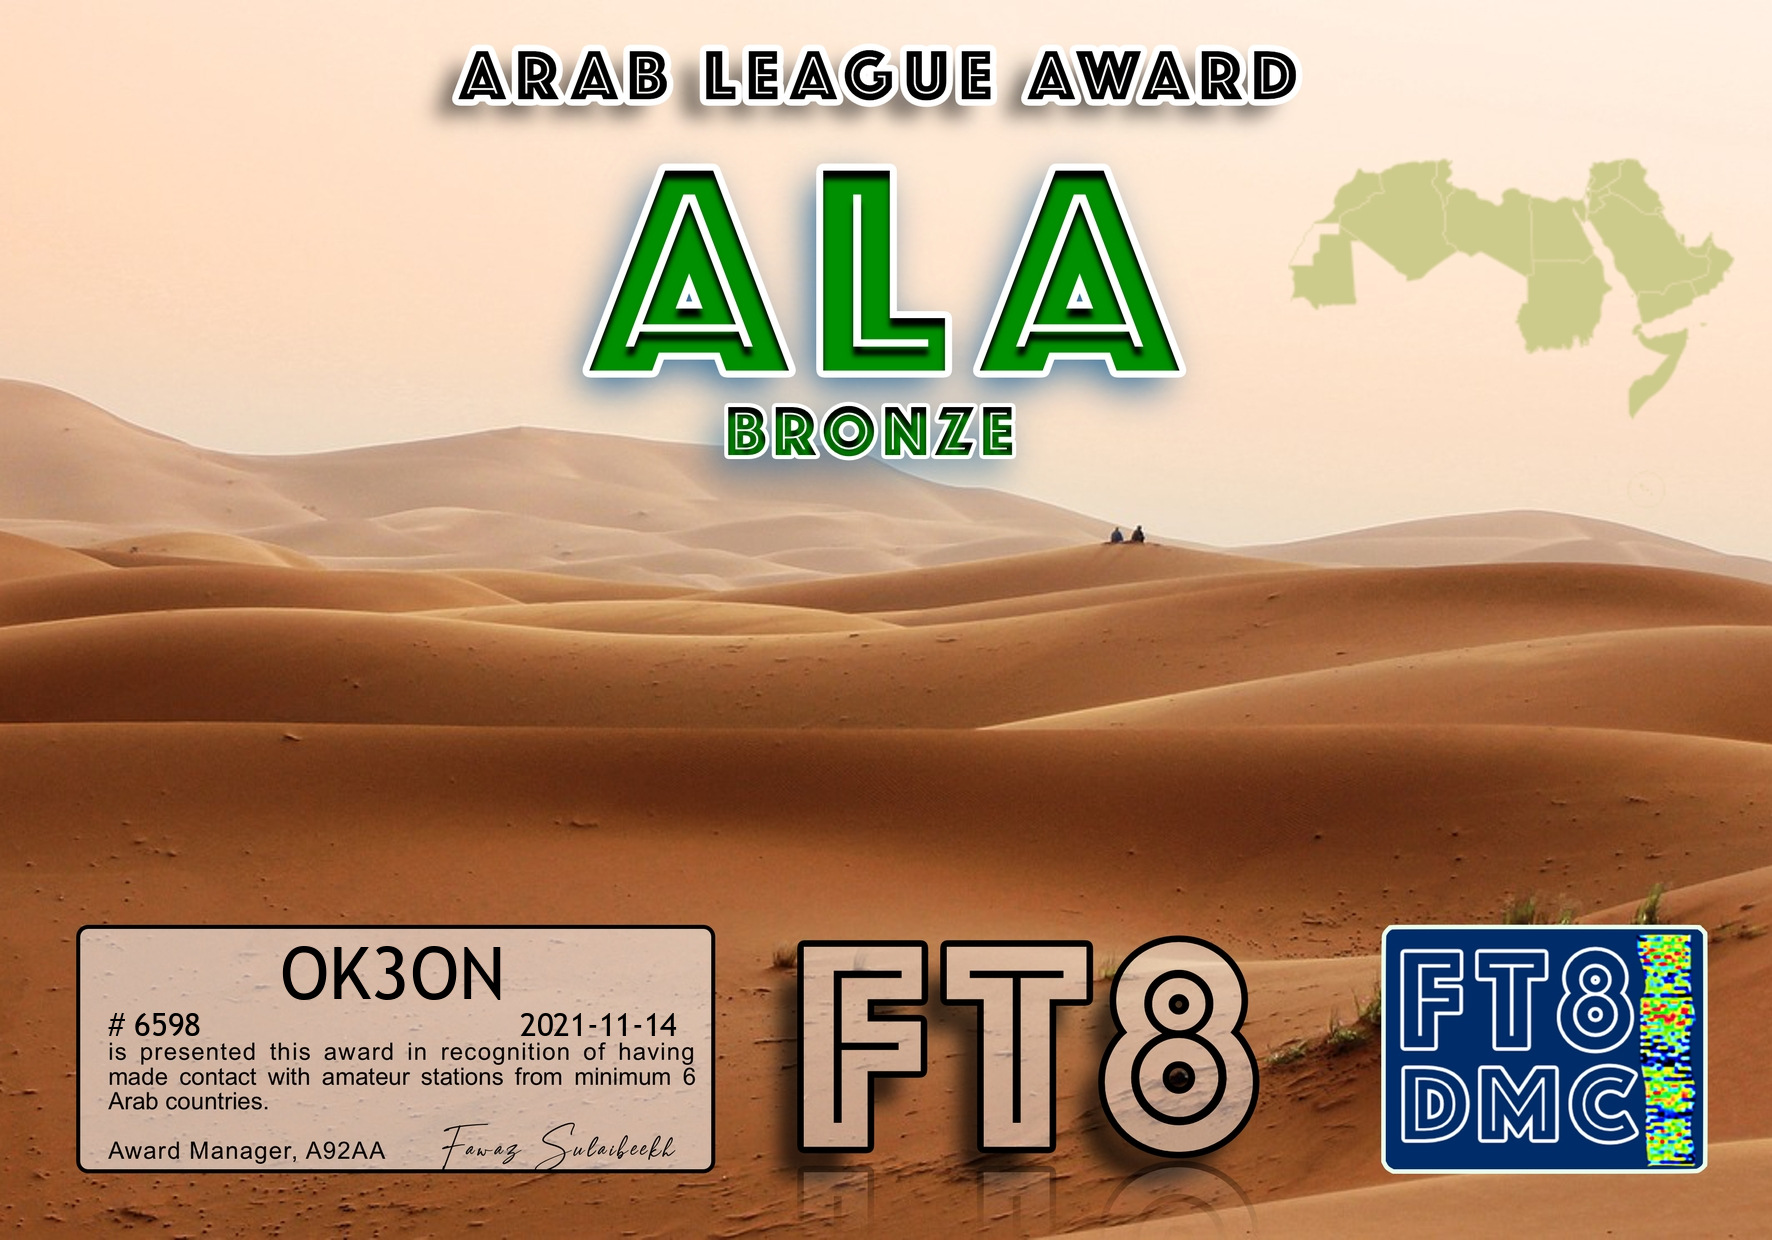 awards/OK3ON-ALA-BRONZE_FT8DMC.jpg